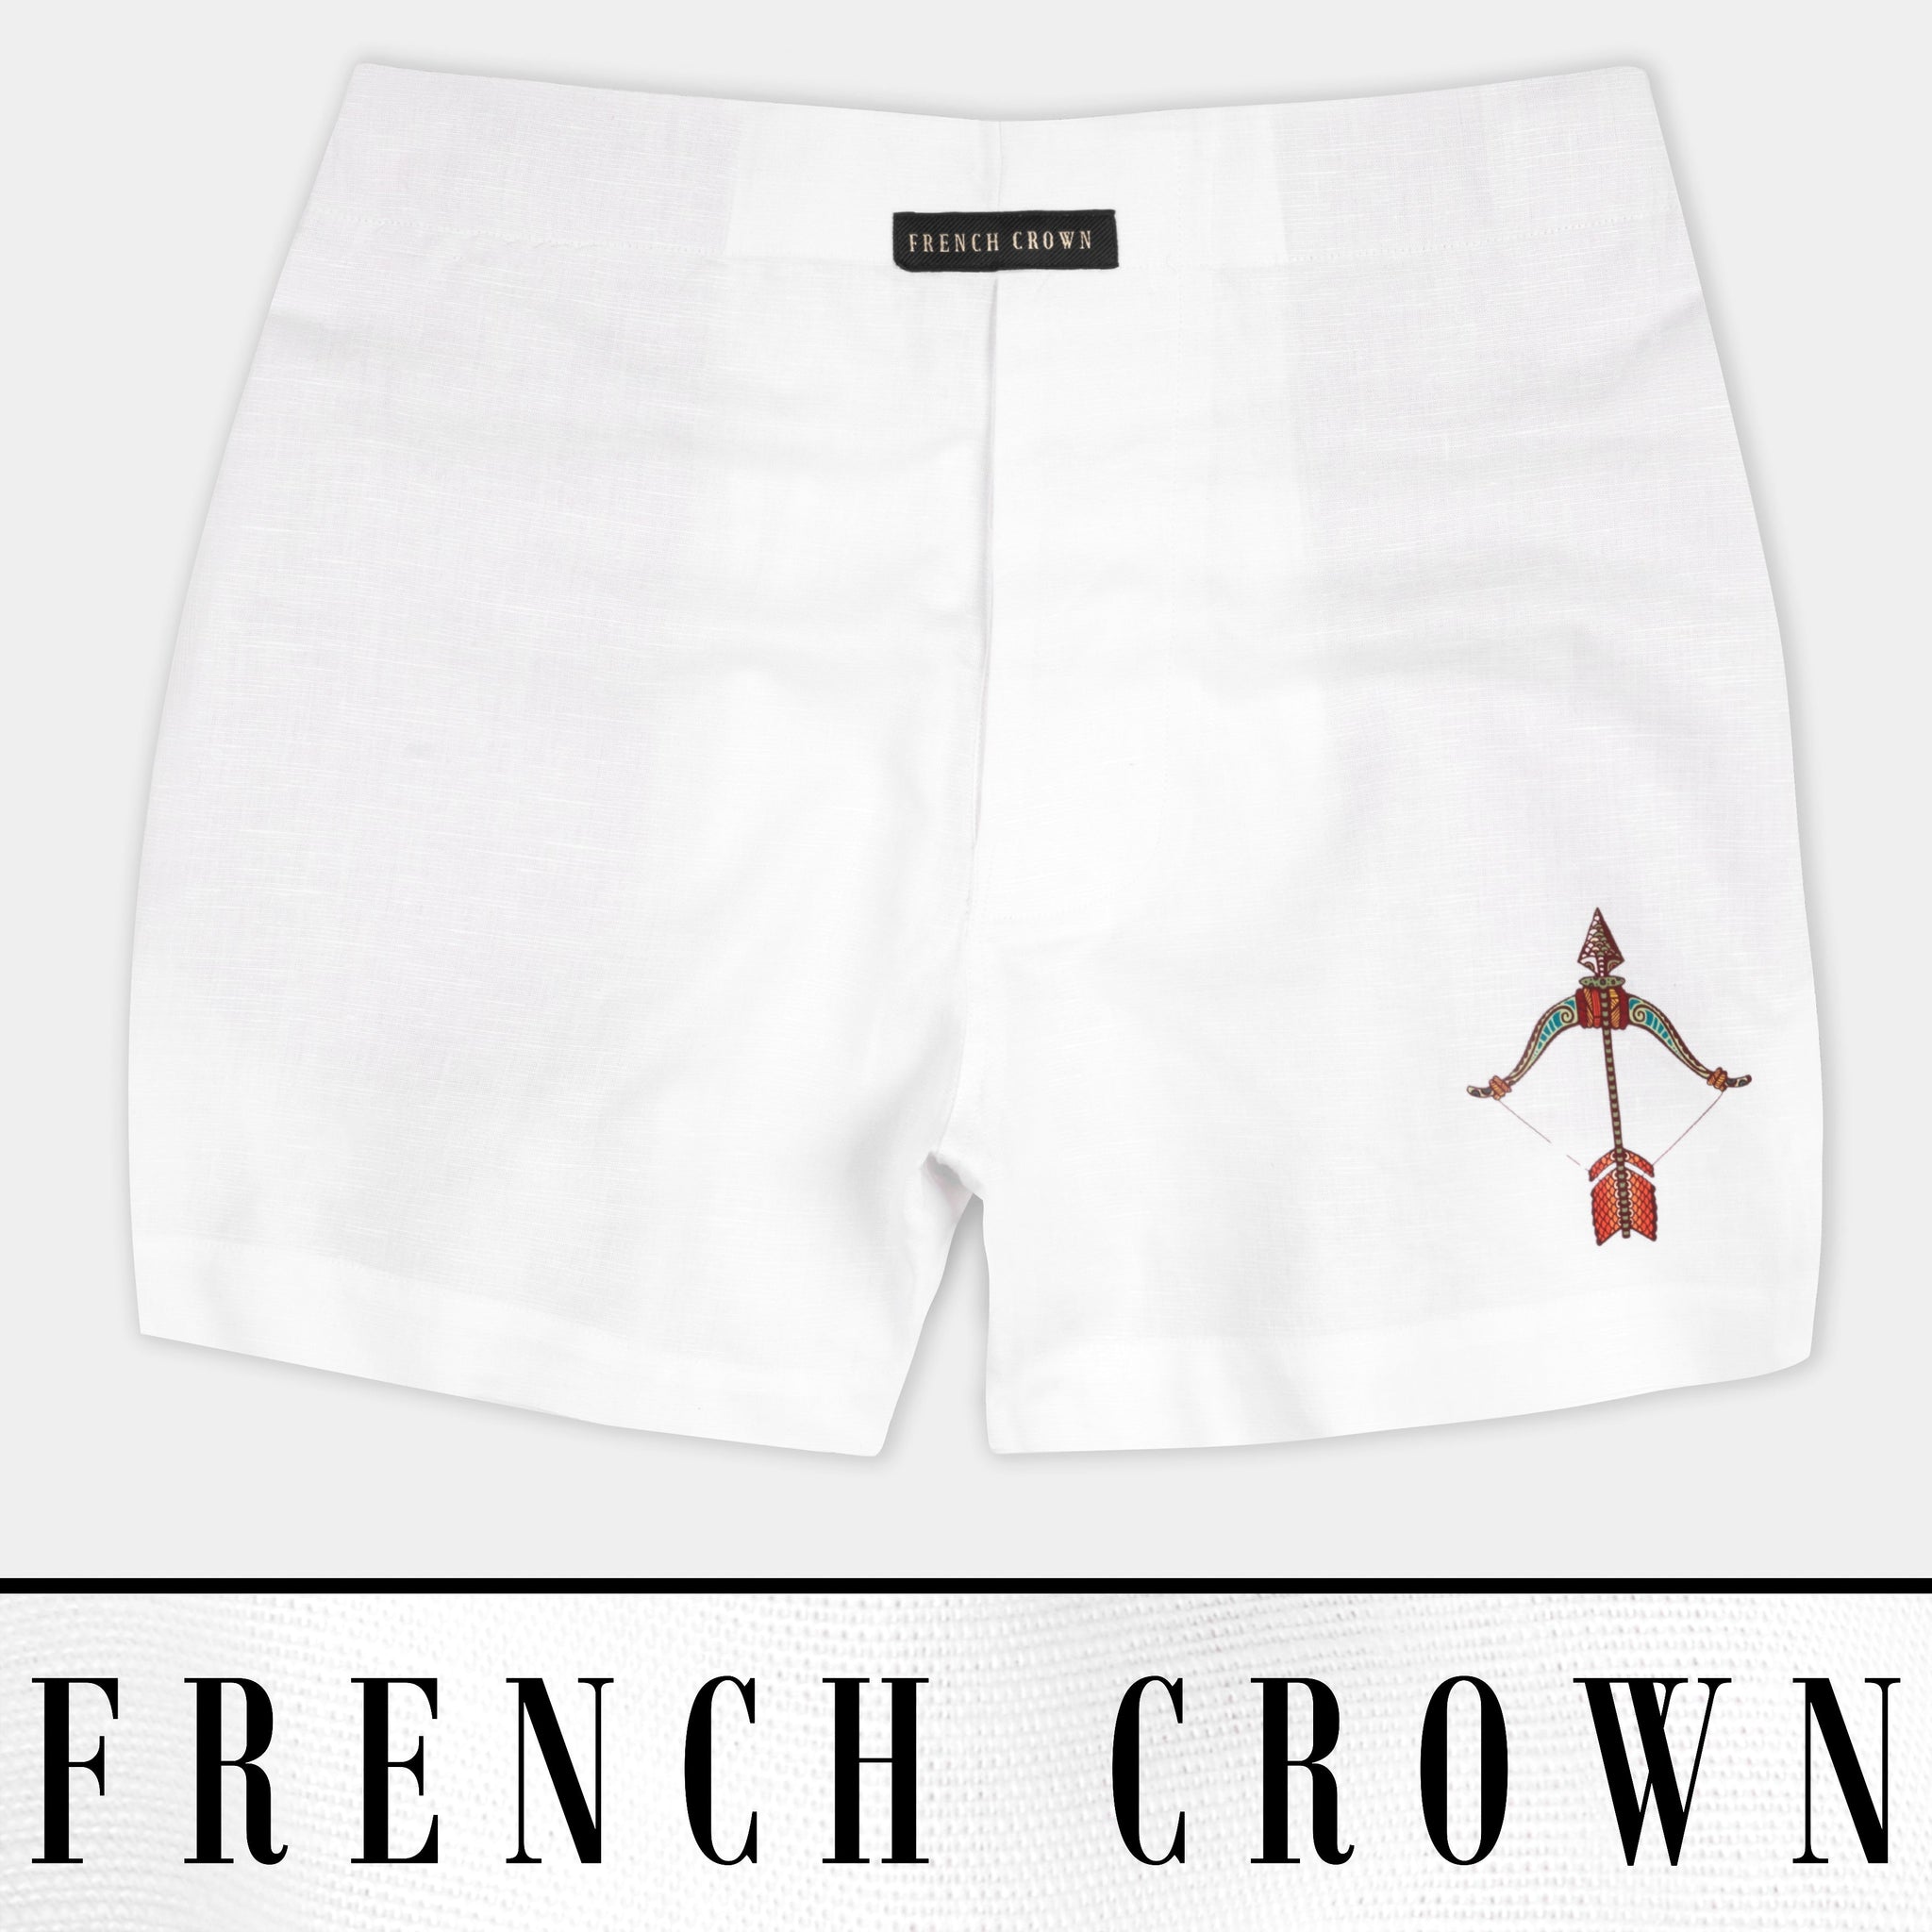 Bright White Plain-Solid Premium Linen Boxers For Man